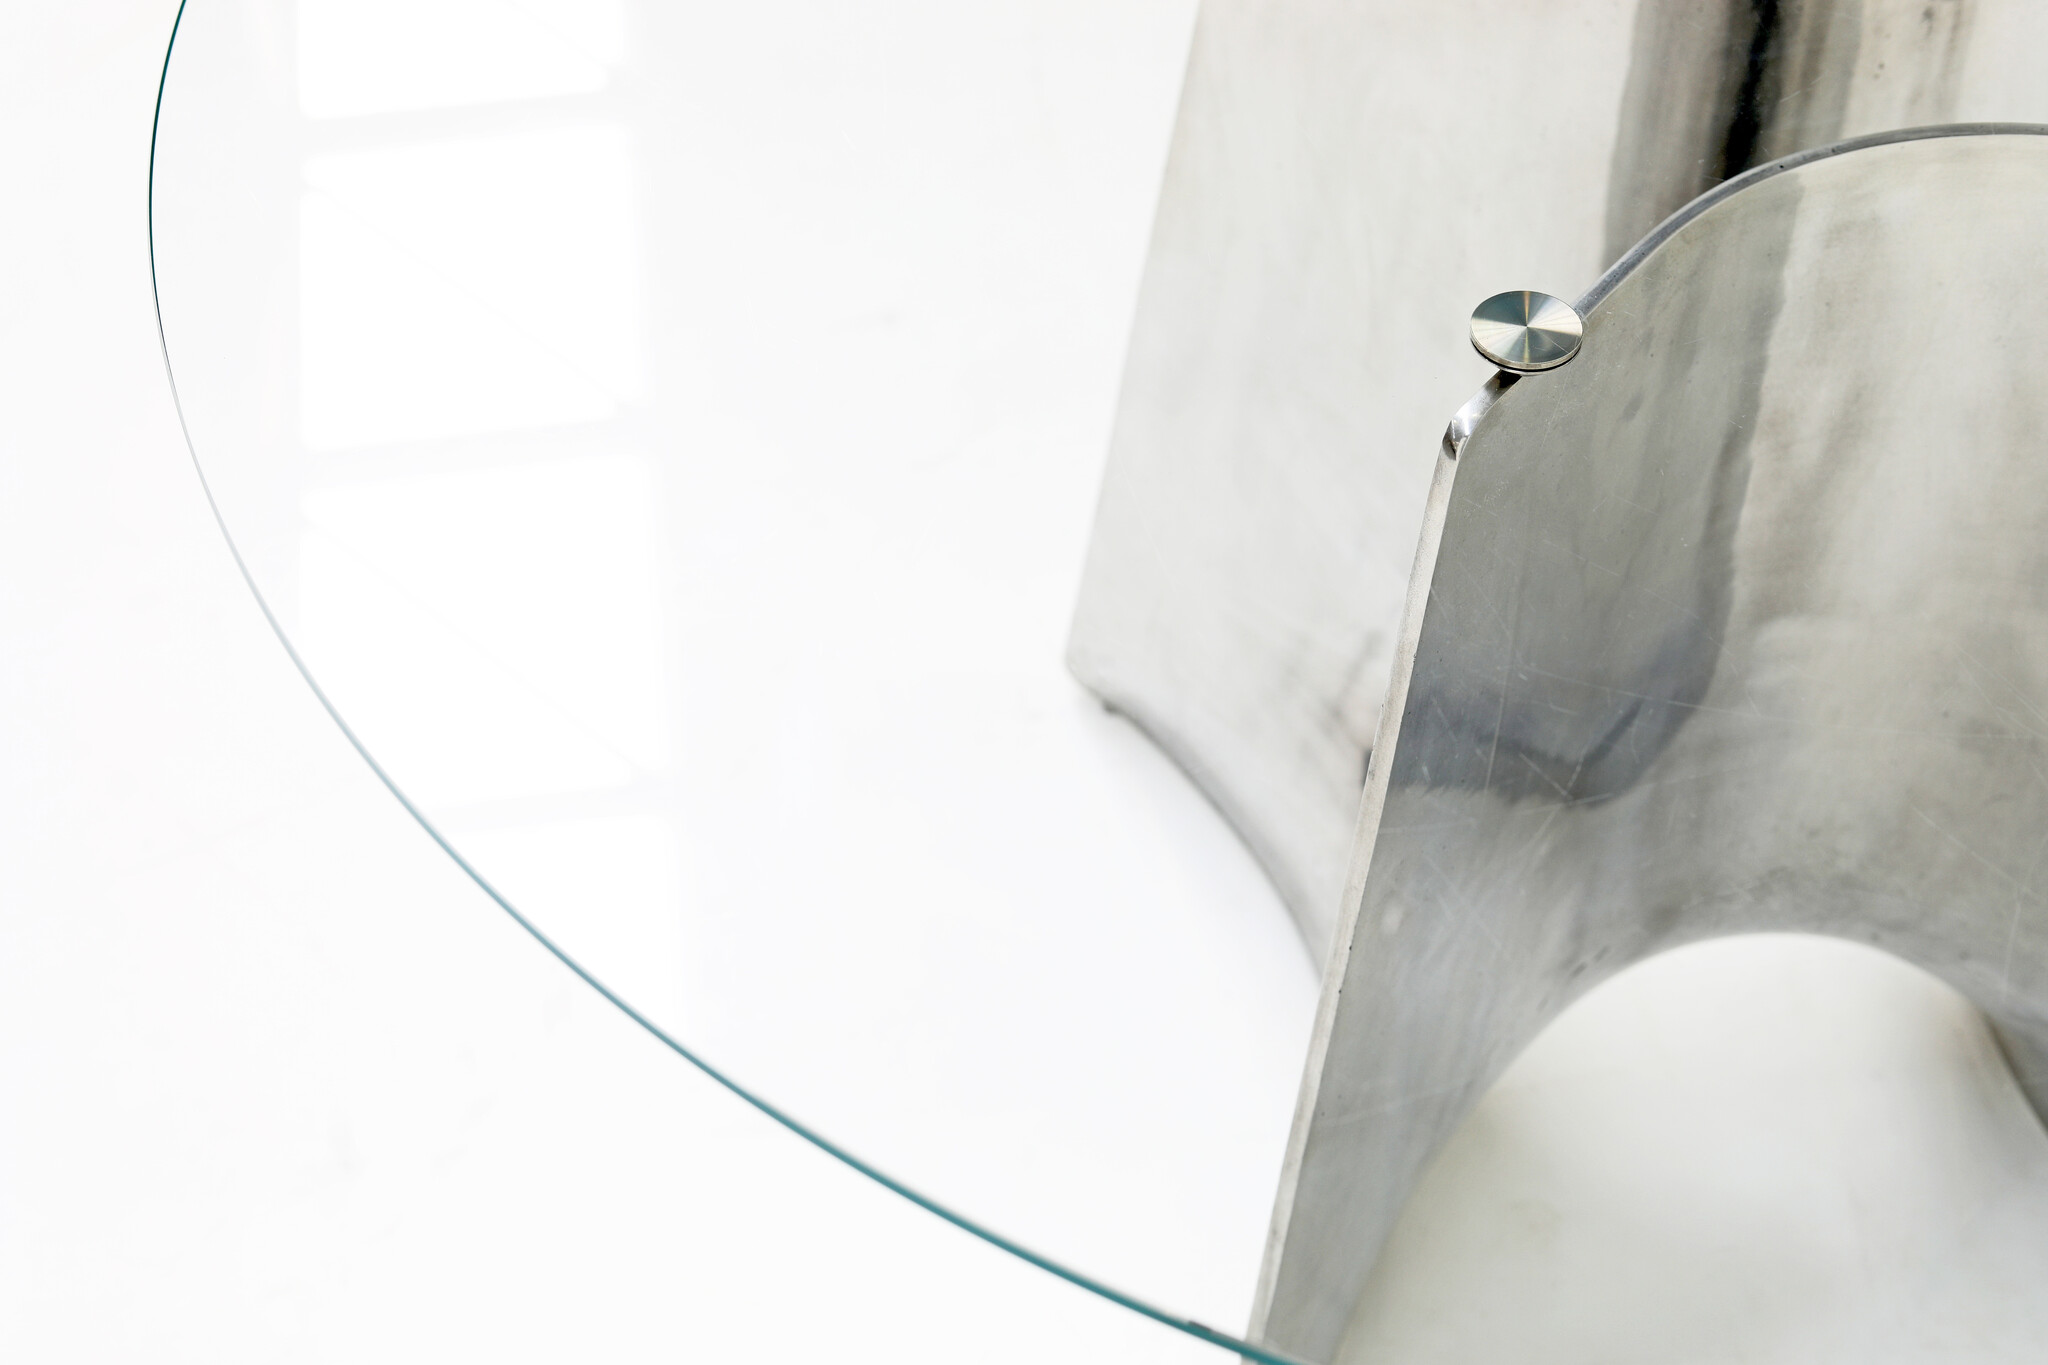 Baleri Italia Bentz aluminum table with glass top by Jeff Miller